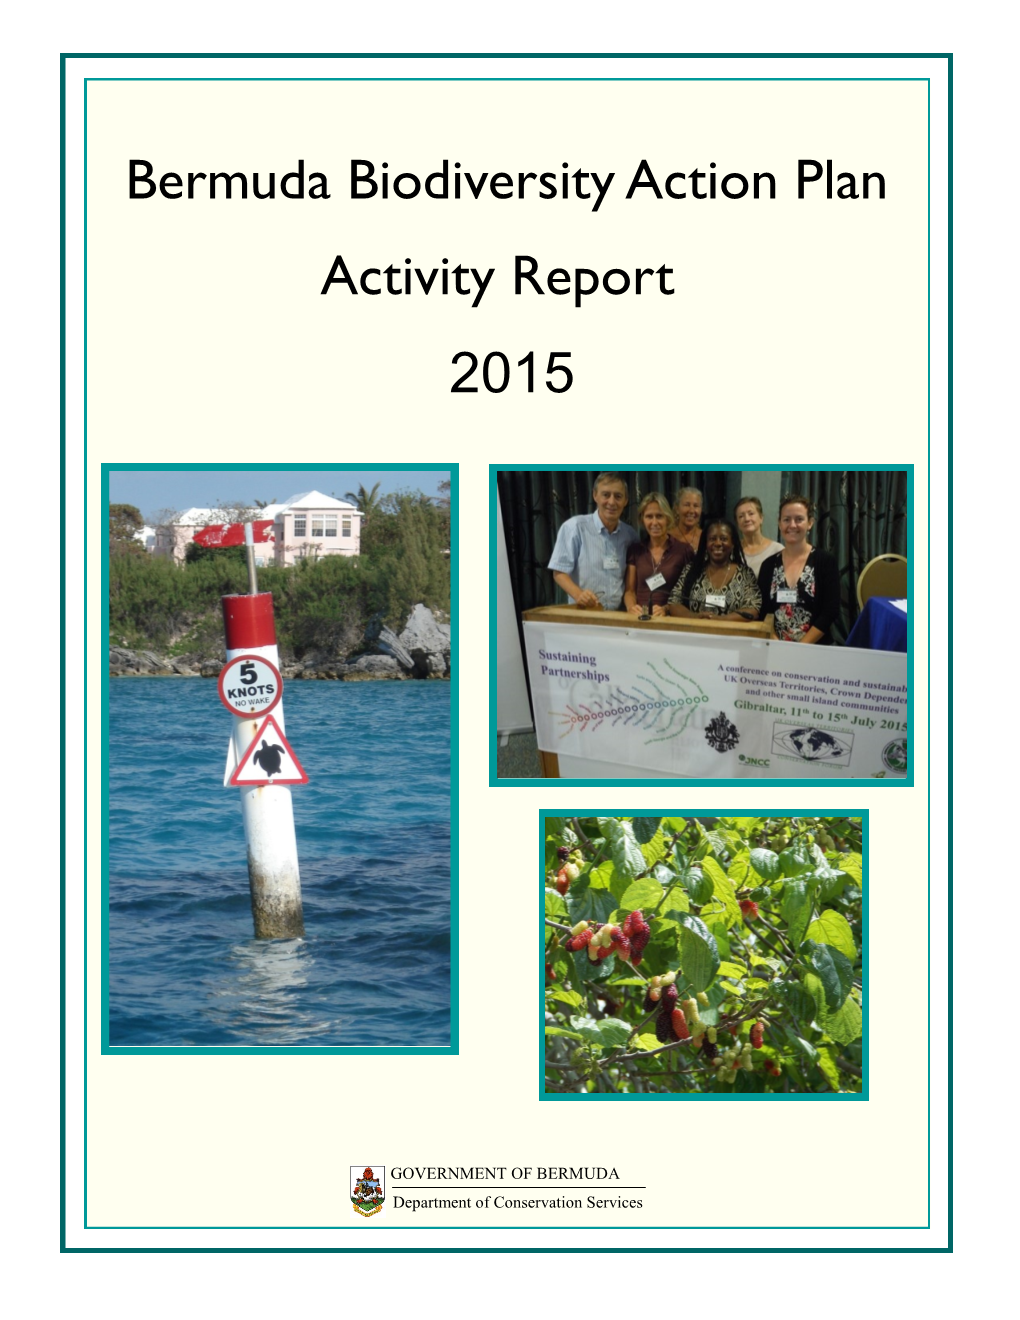 Bermuda Biodiversity Action Plan Activity Report 2015